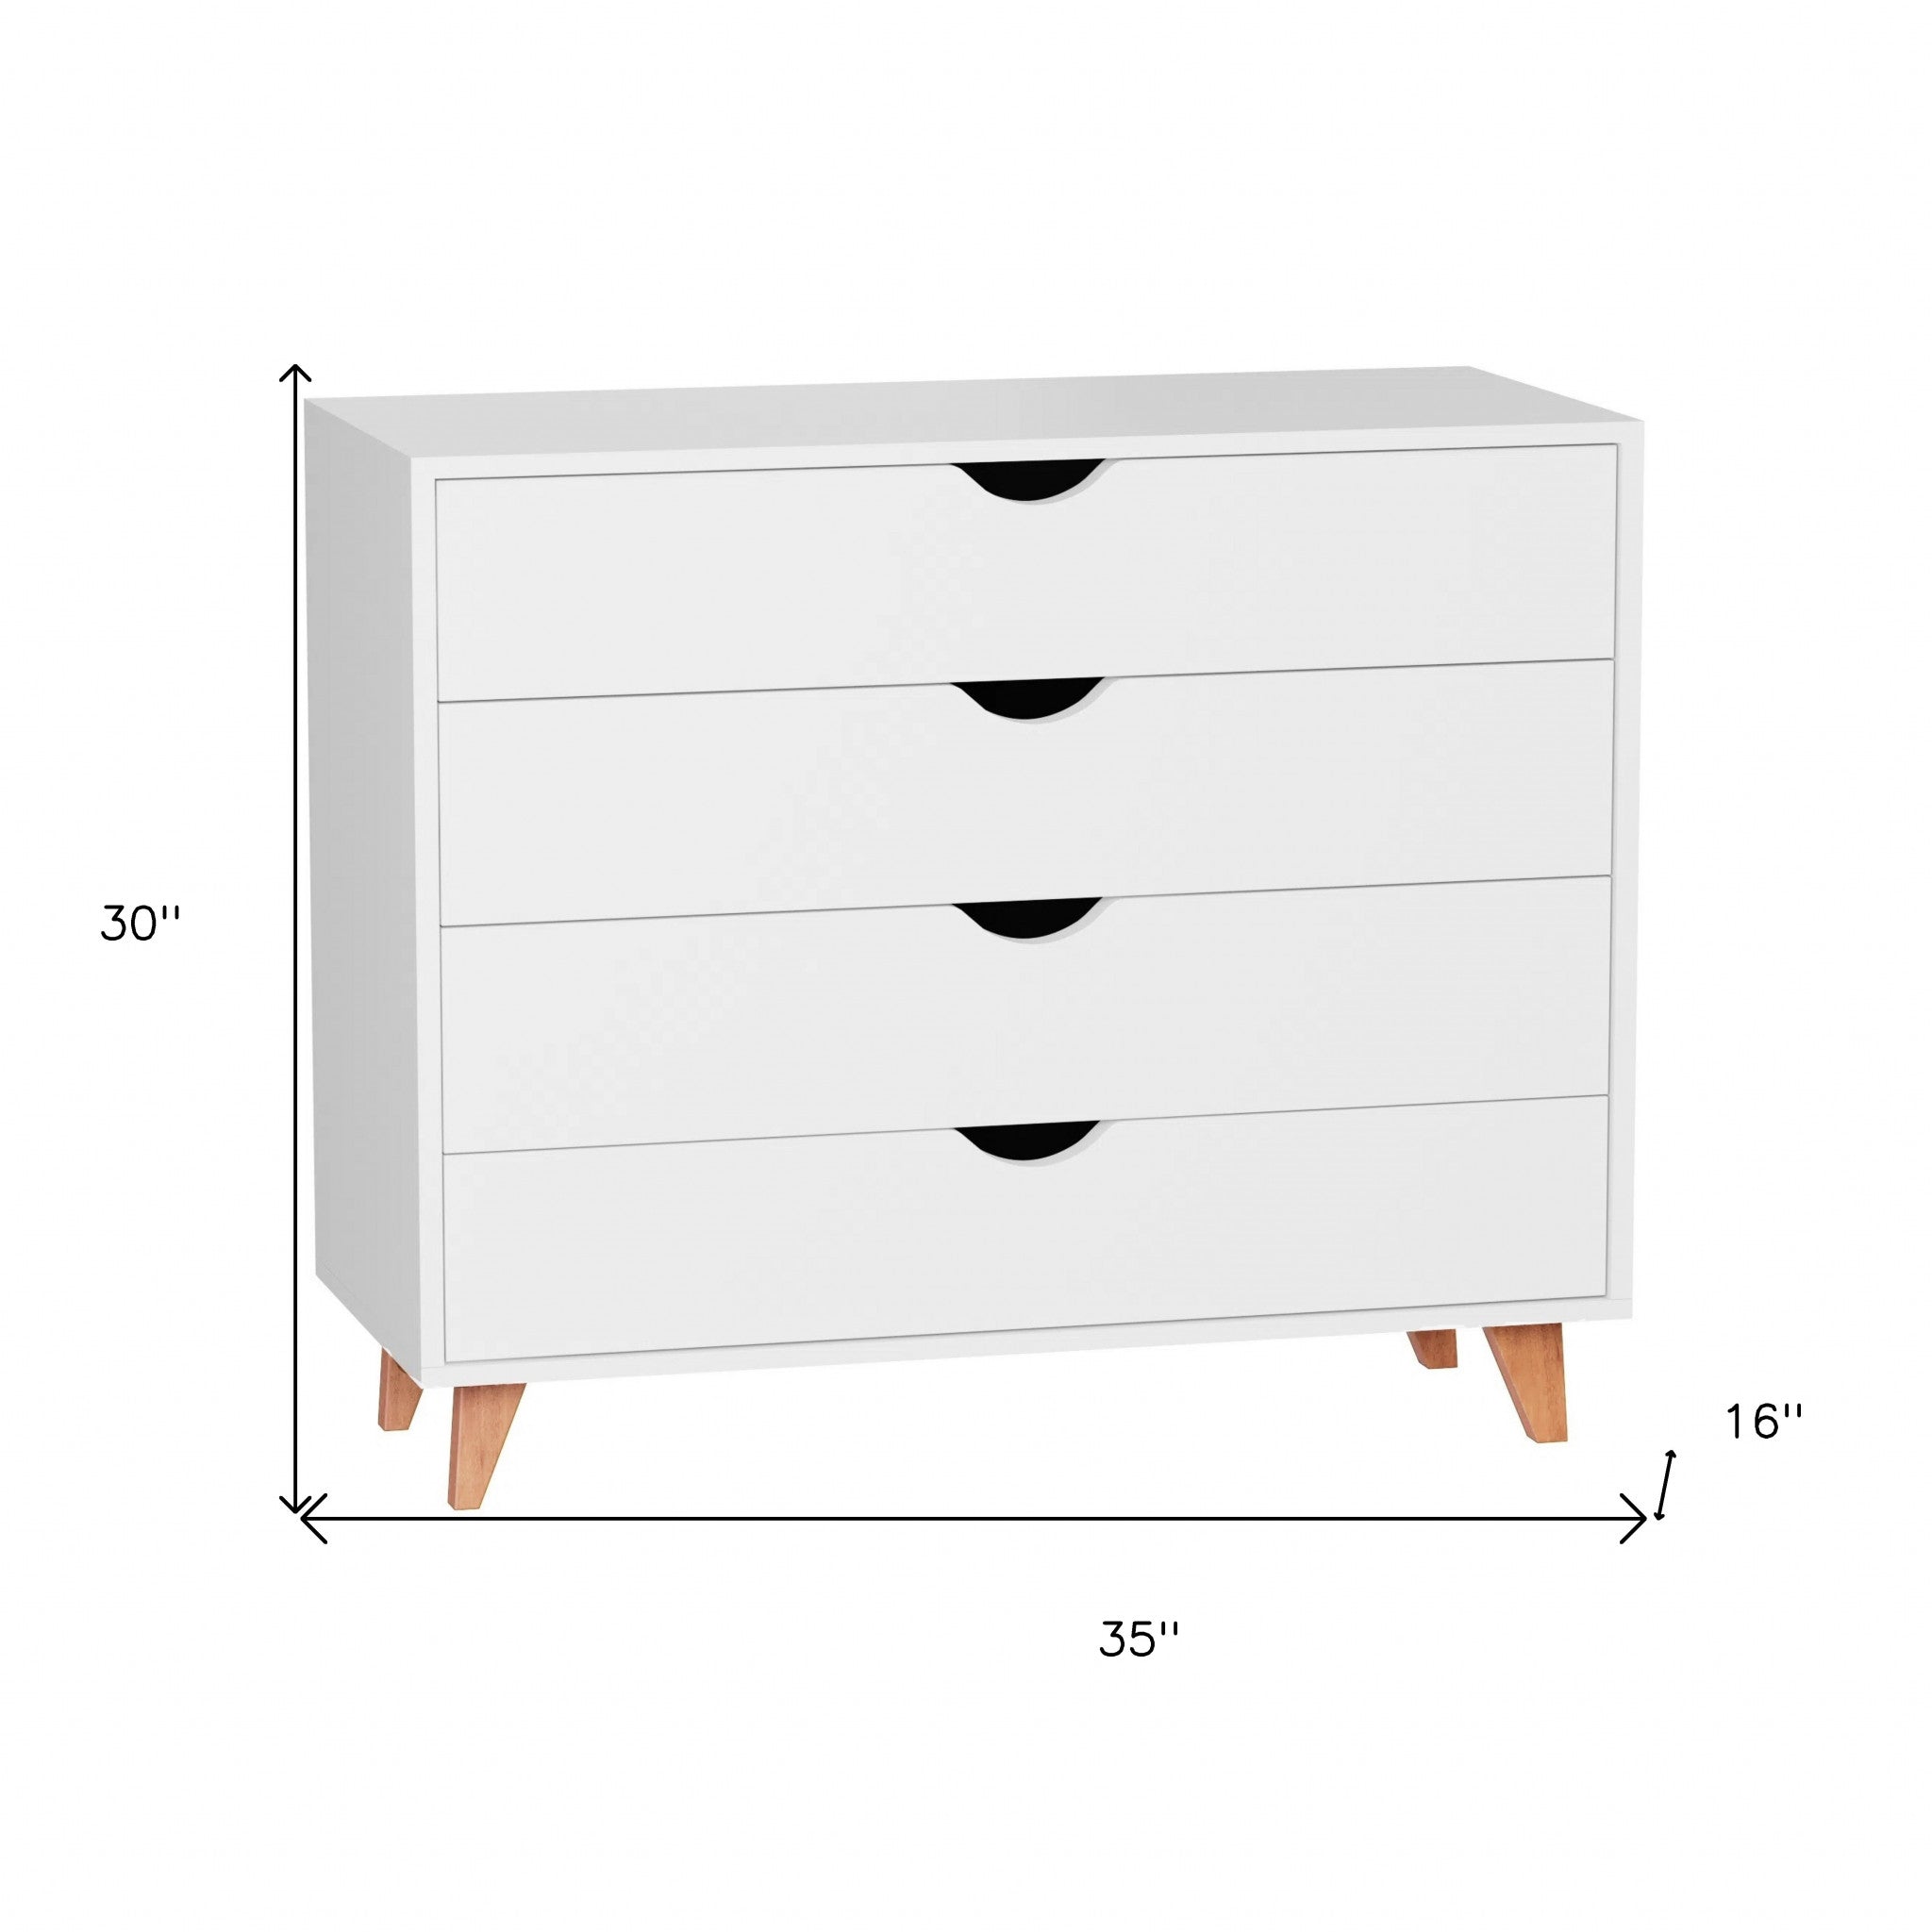 35" White Solid Wood Four Drawer Dresser